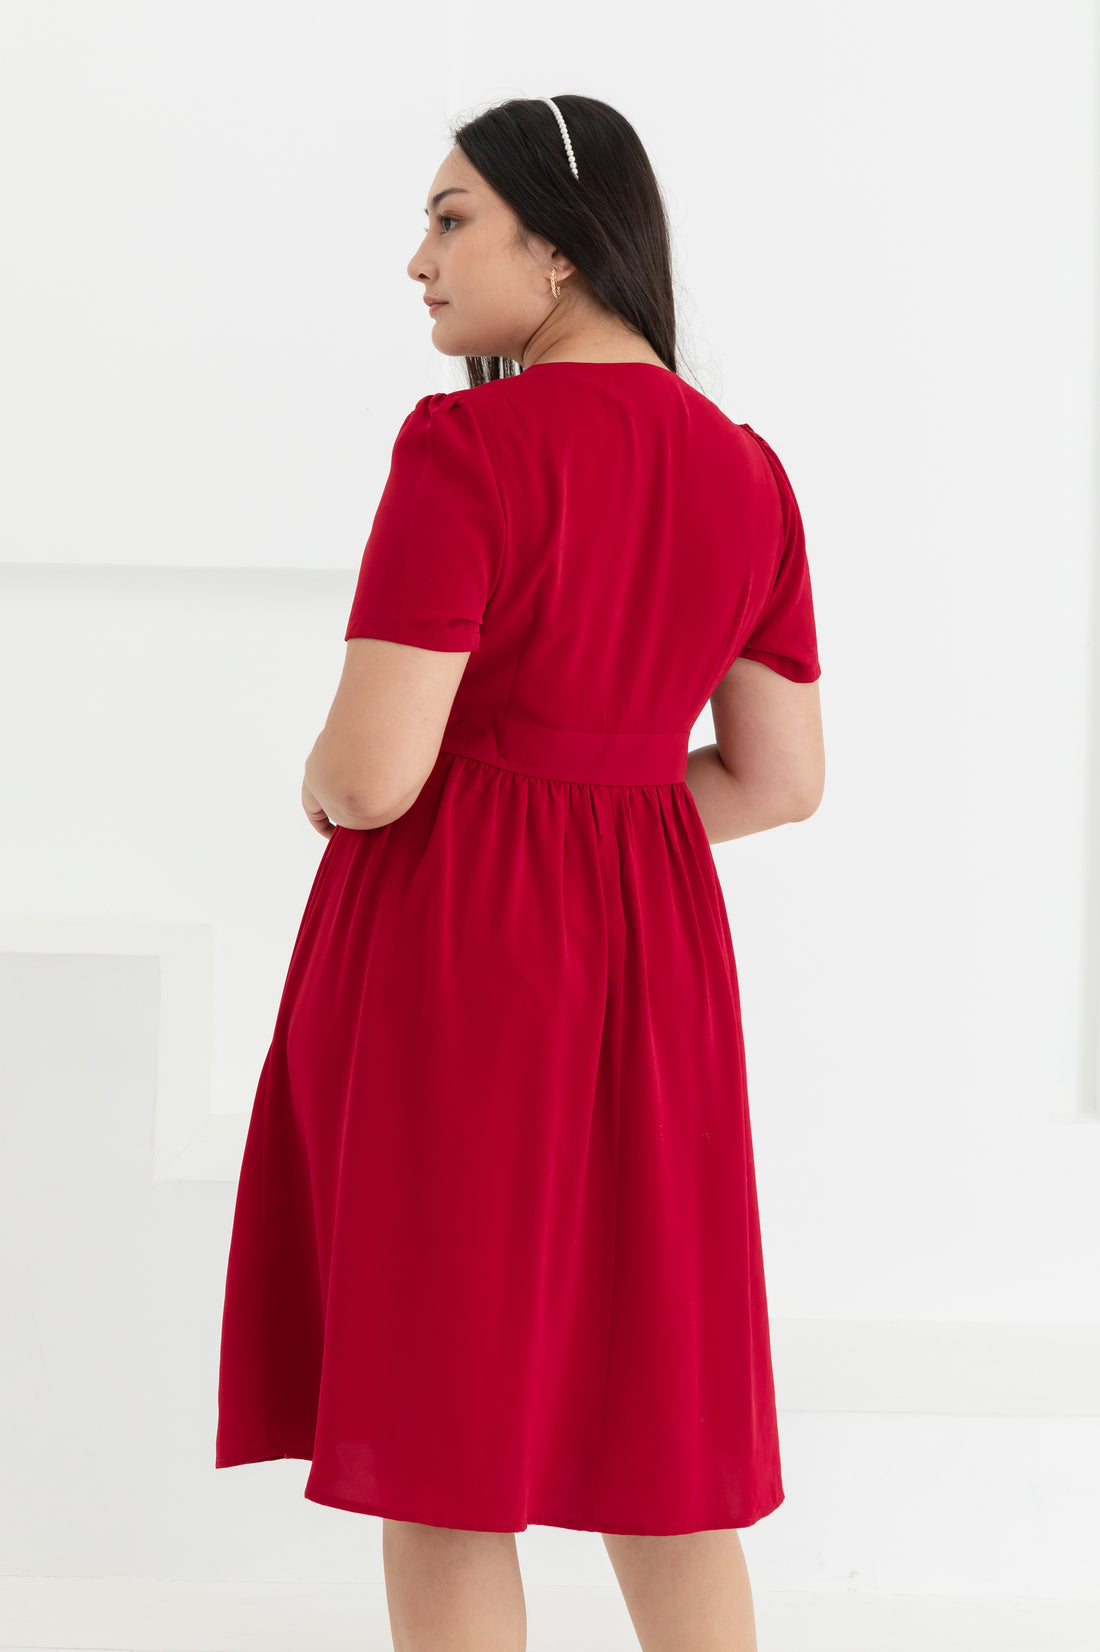 Jeanette Scalloped Neckline Dress In Carmine Red